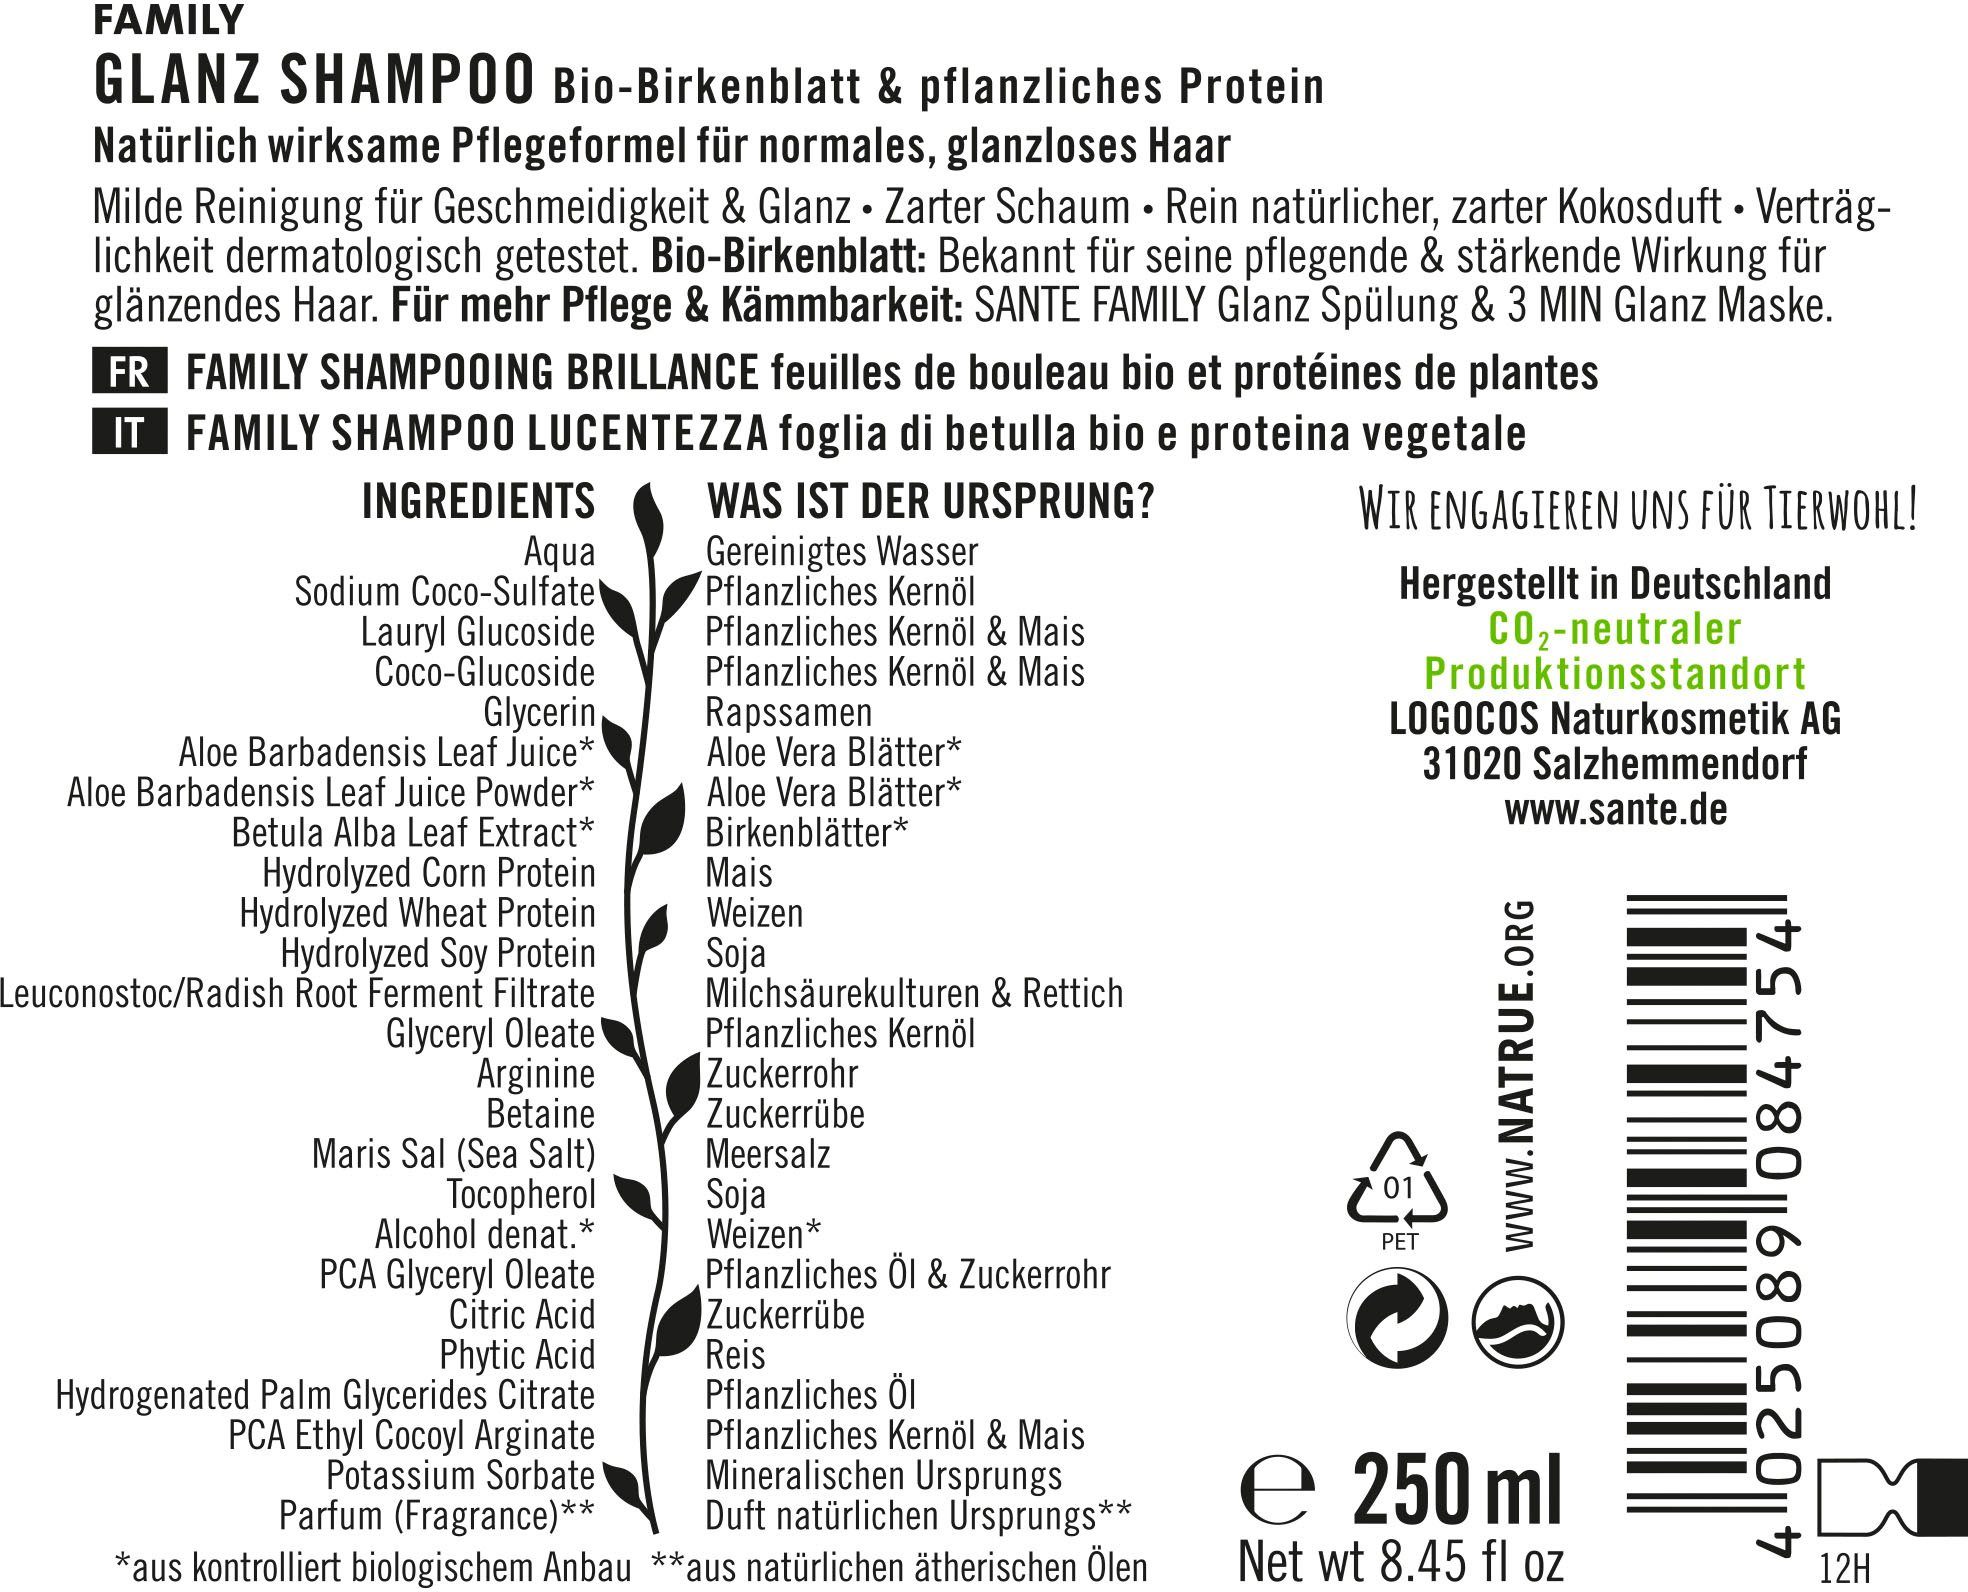 Haarshampoo Glanz Shampoo FAMILY SANTE